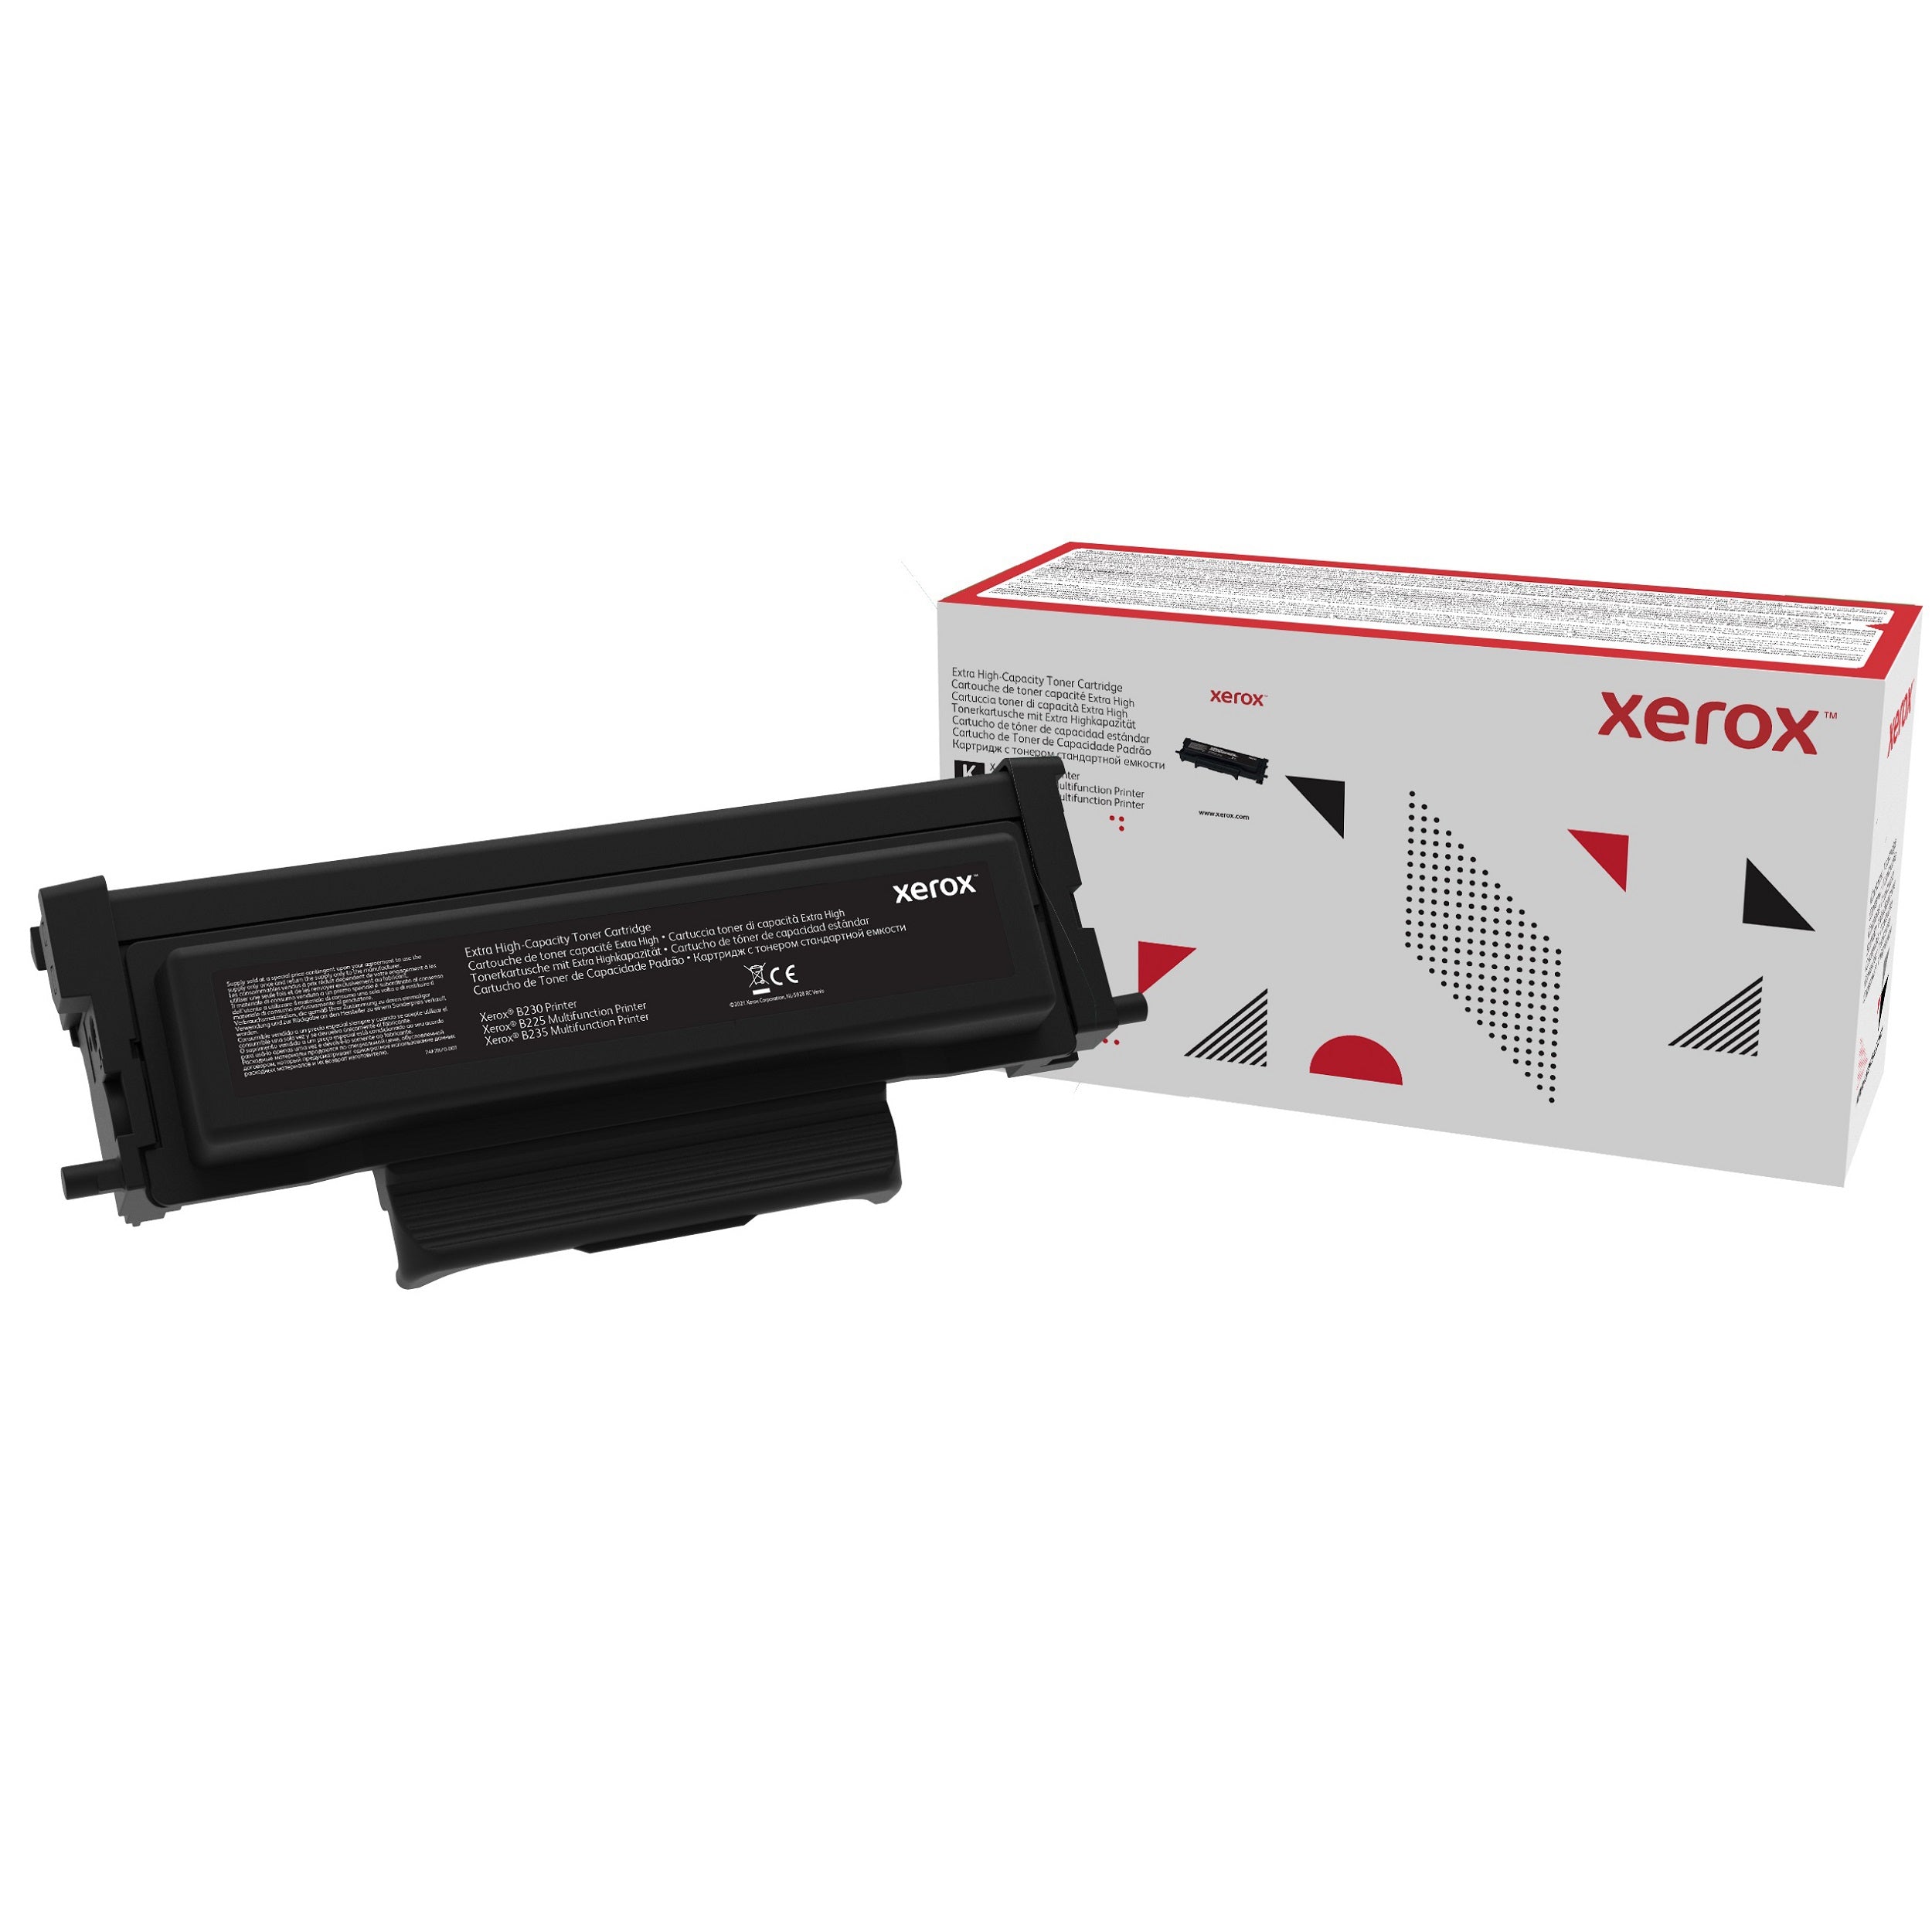 Absolute Toner Xerox Genuine 006R04400 Black High Yield Toner Cartridge For B225, B230 And B235 Printer/Multifunction Original Xerox Cartridges